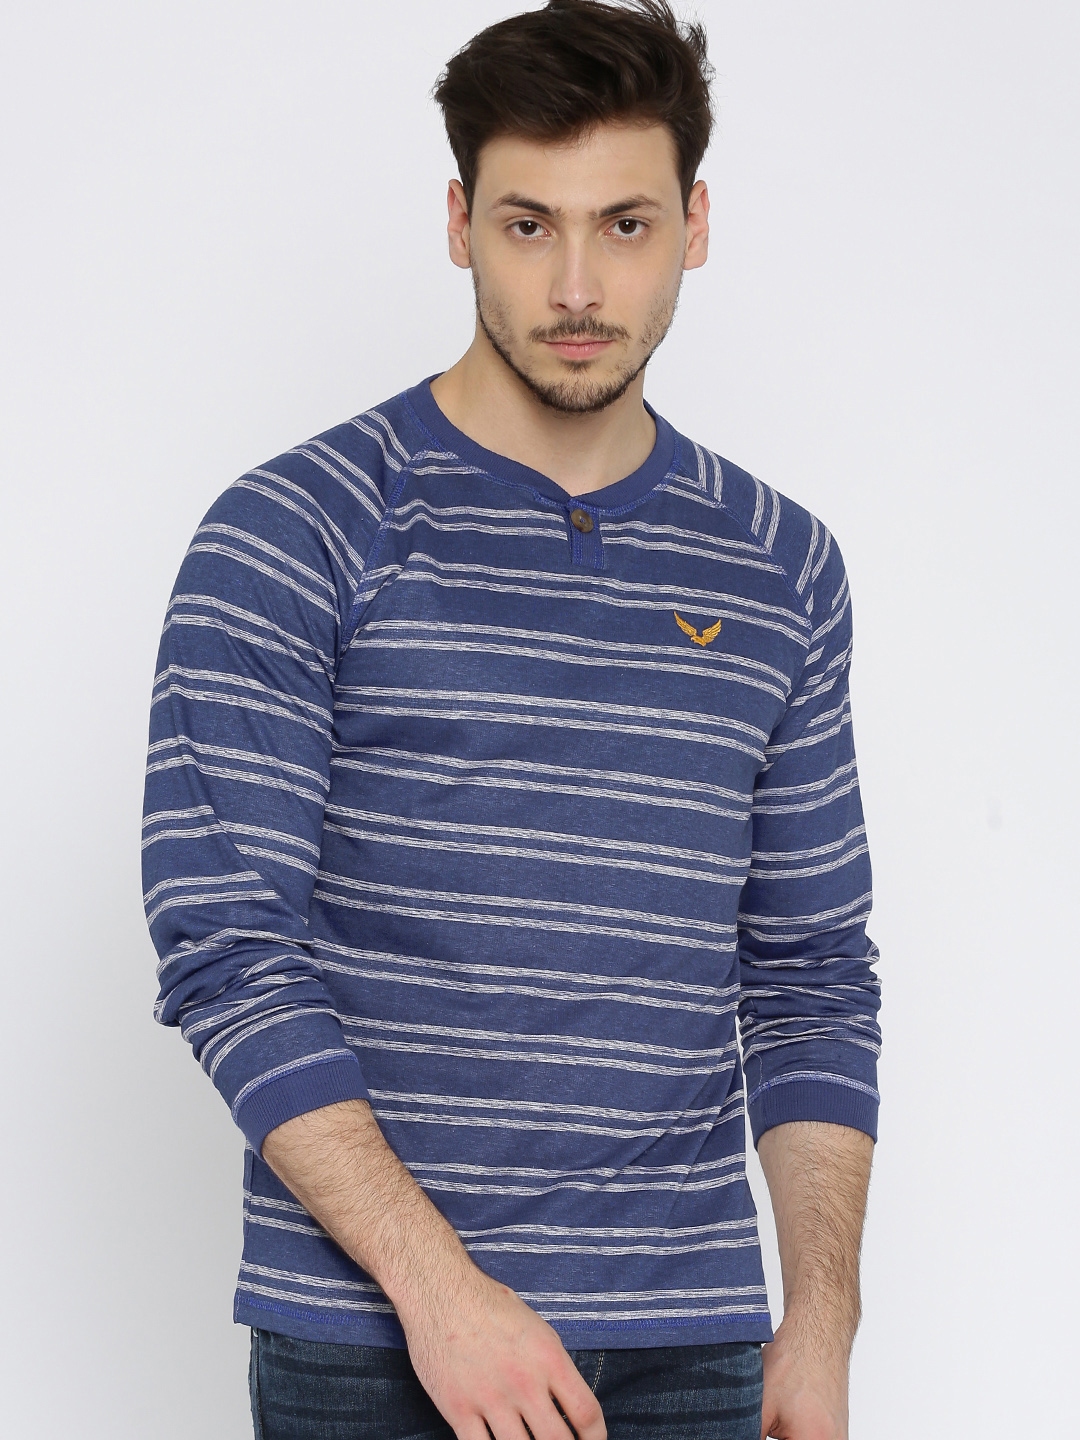 Buy URBAN EAGLE By Pantaloons Grey Melange & Blue Tropical Print T Shirt -  Tshirts for Men 1260982